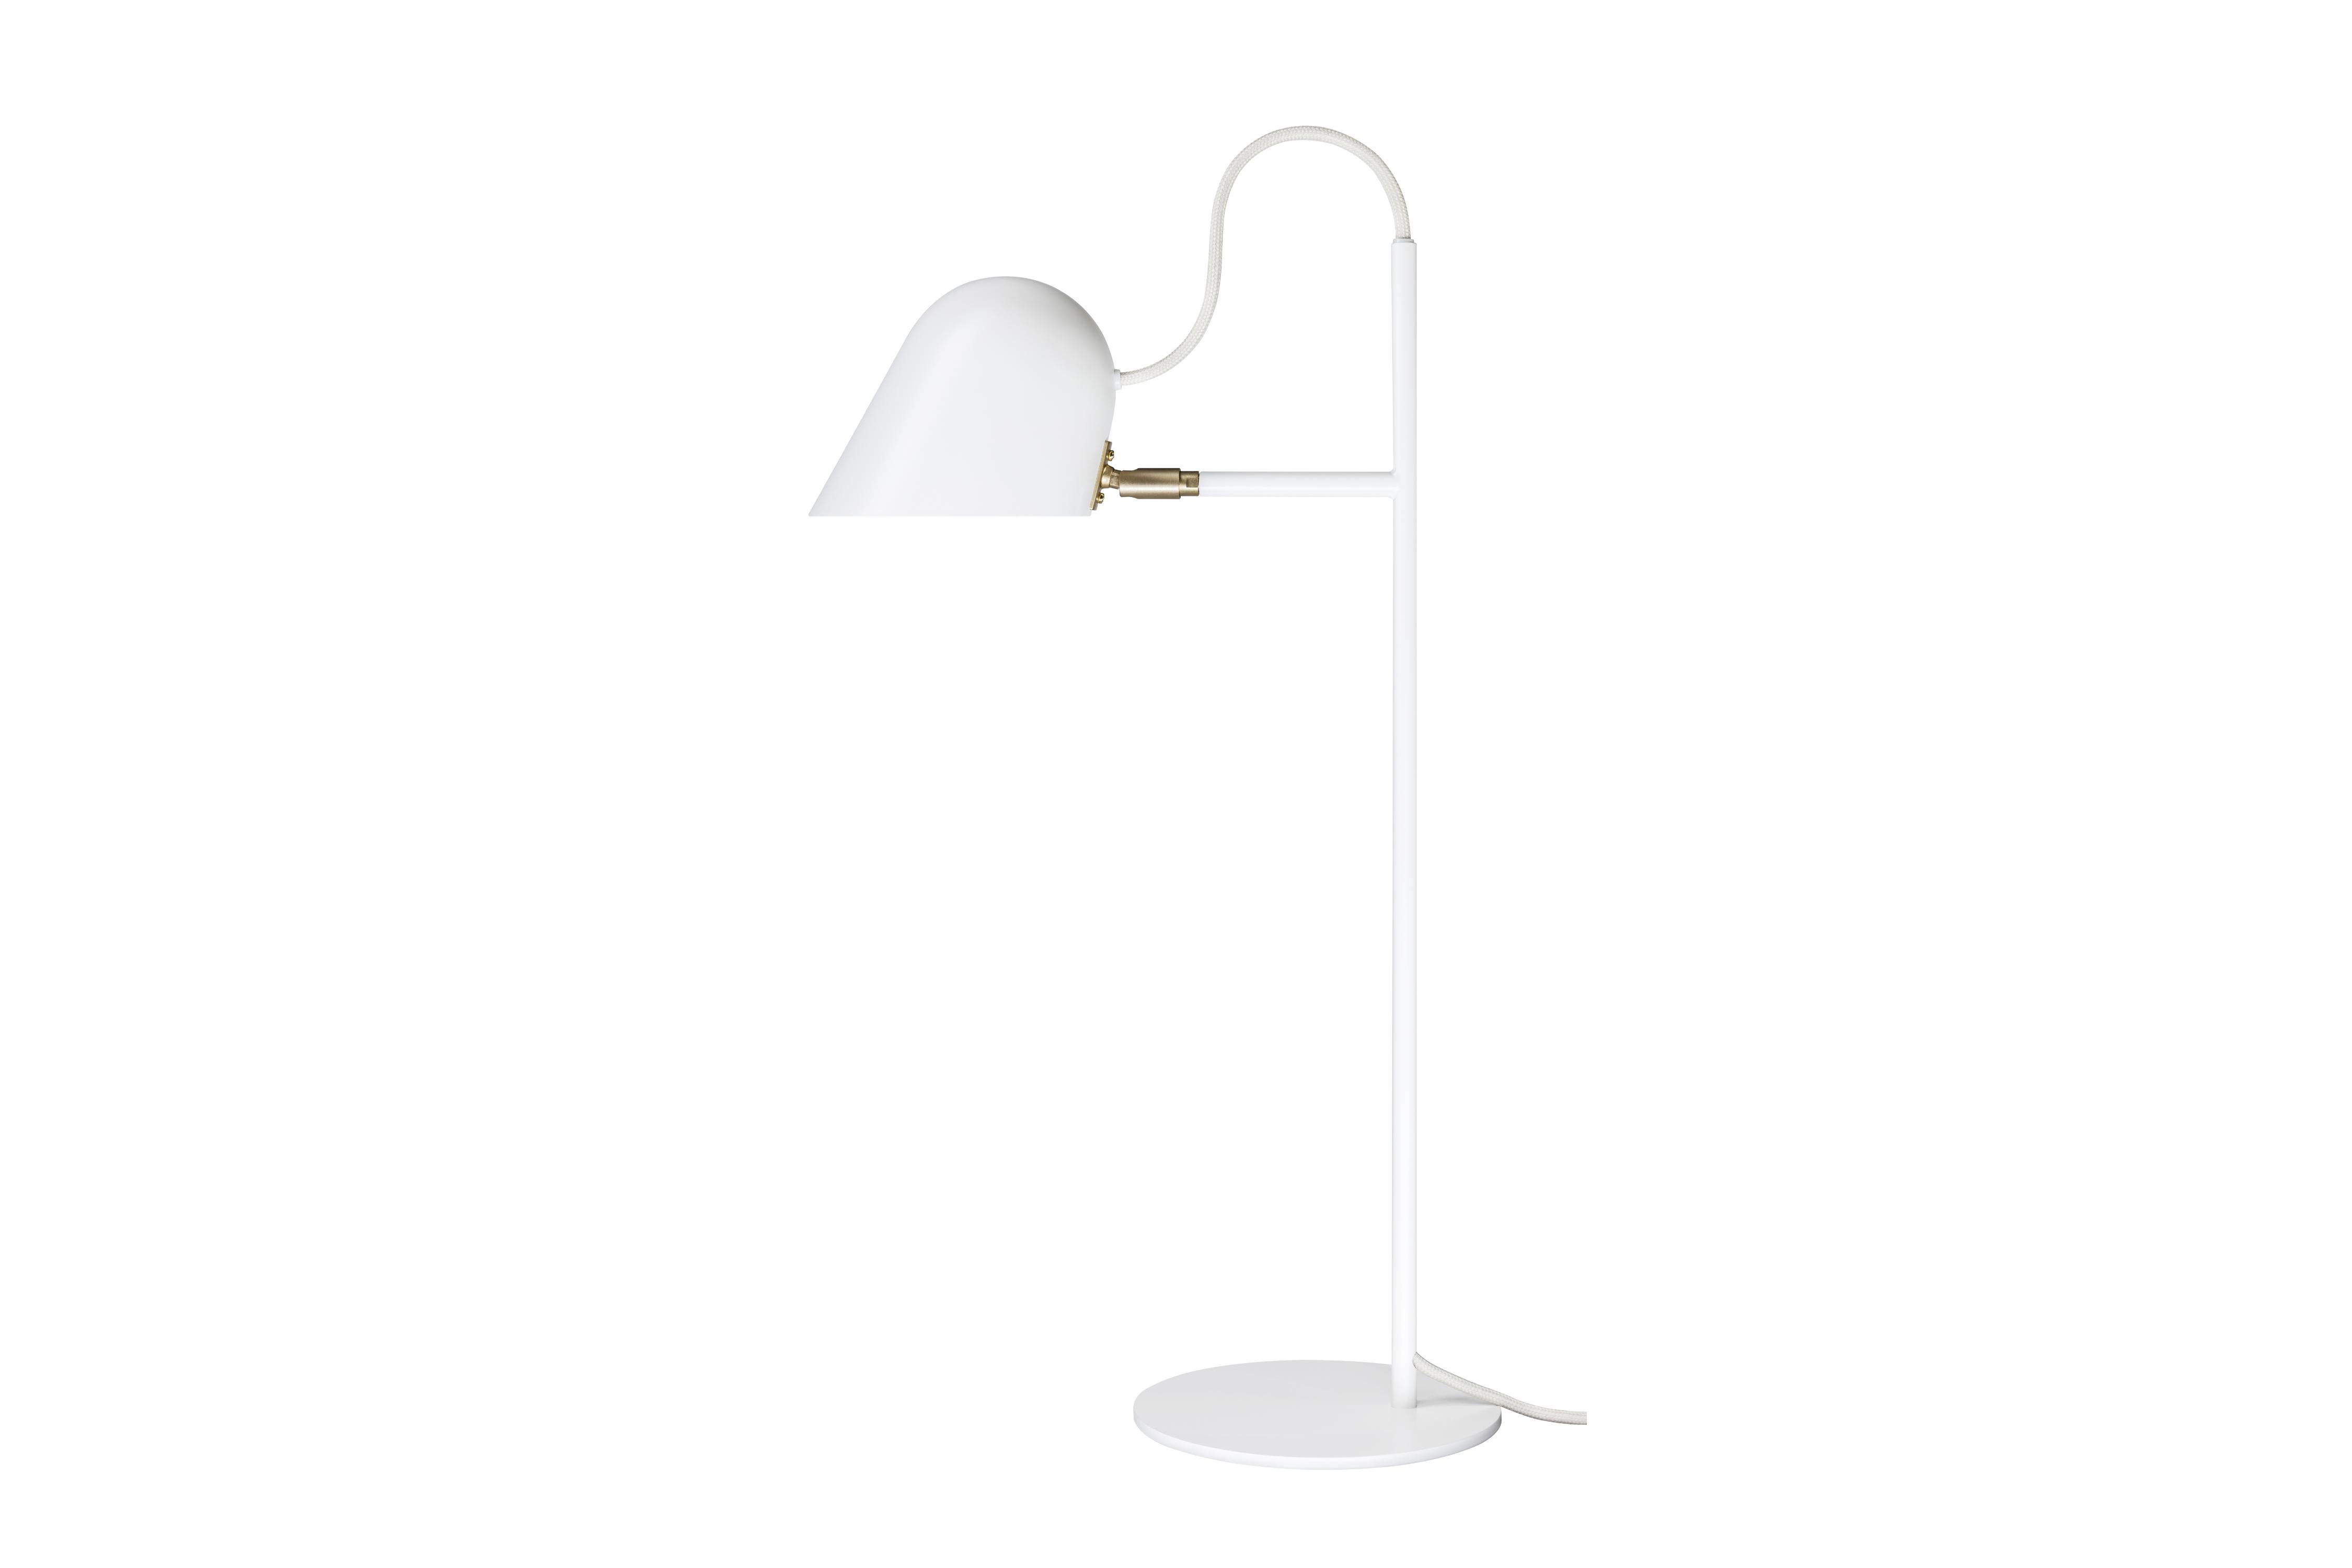 'Streck' Table Lamp by Joel Karlsson for Örsjö in Warm Gray For Sale 2